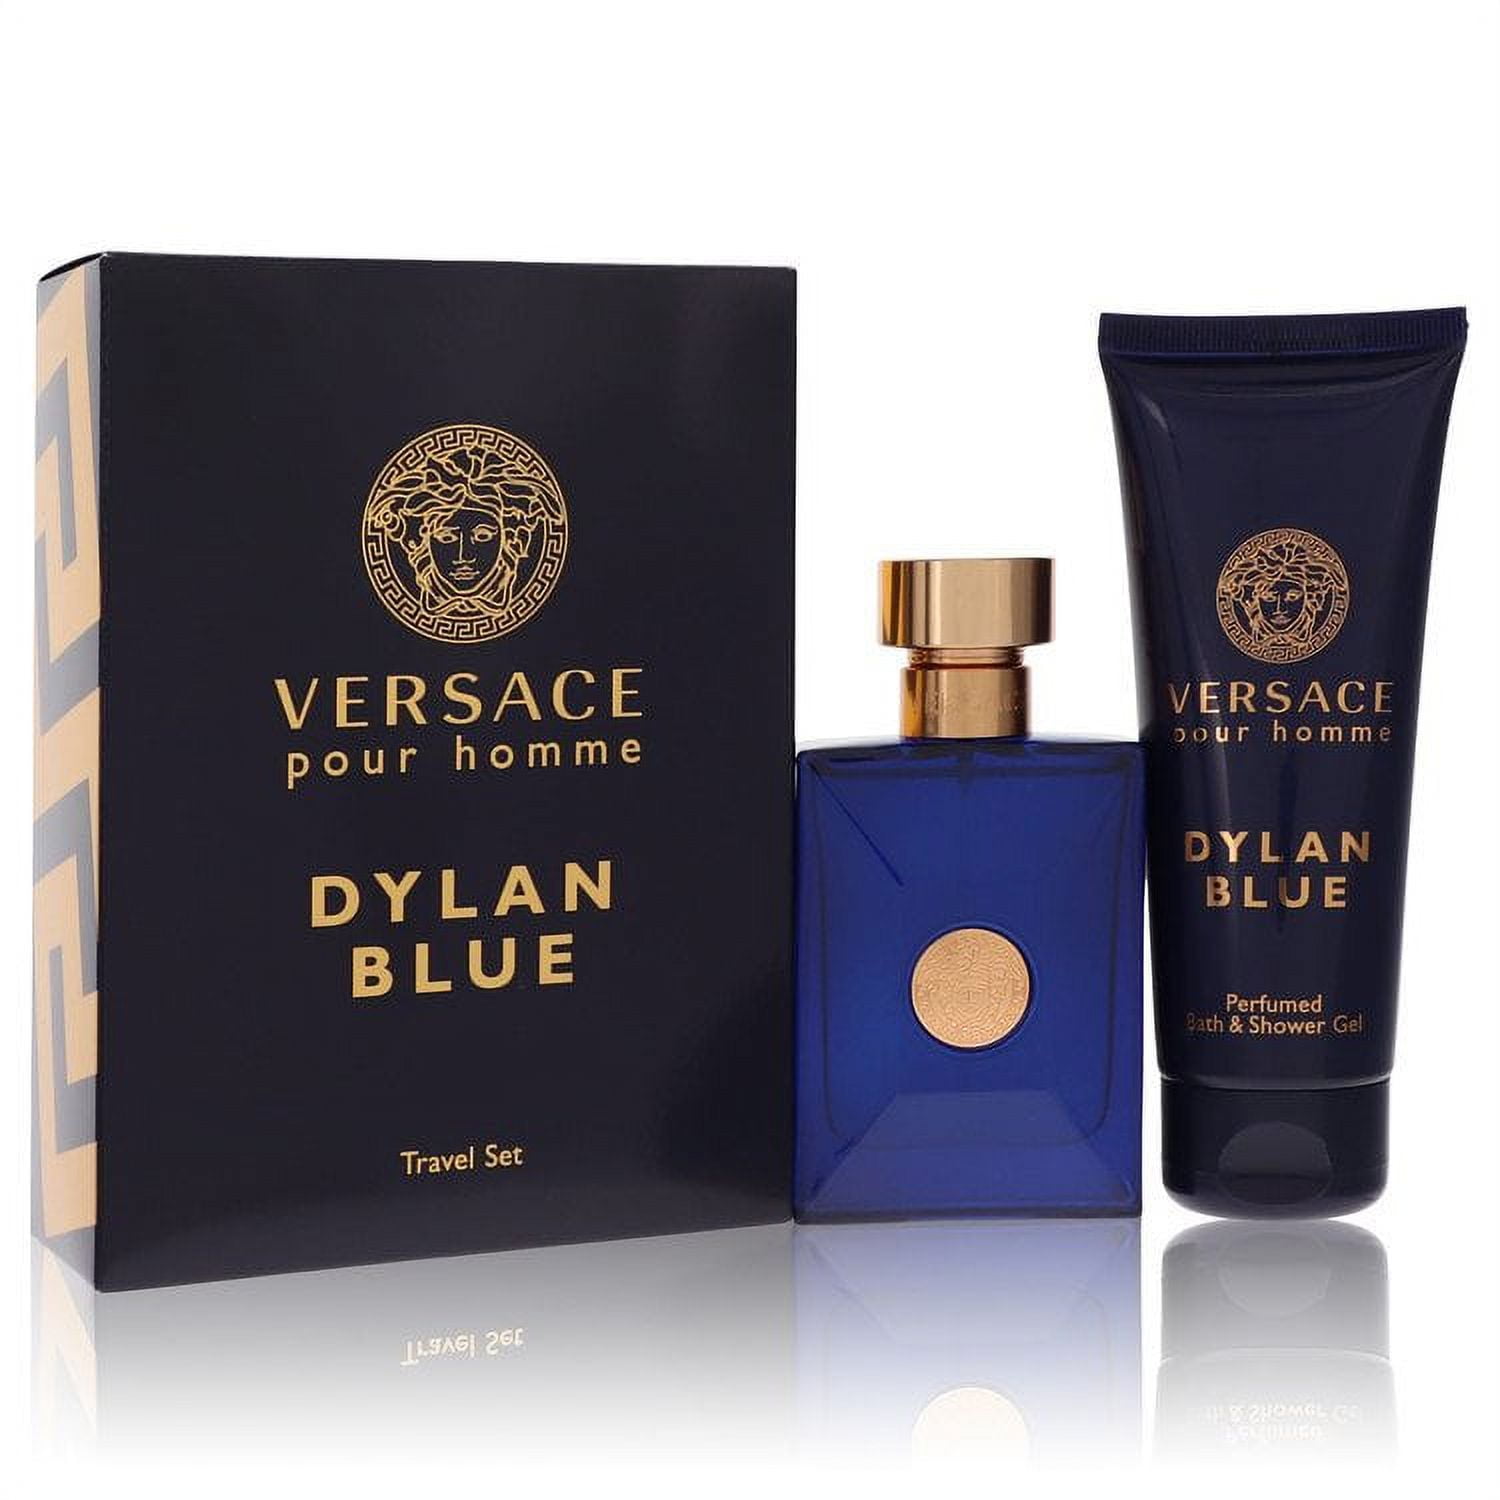 Versace Dylan Blue Perfume Gift Set